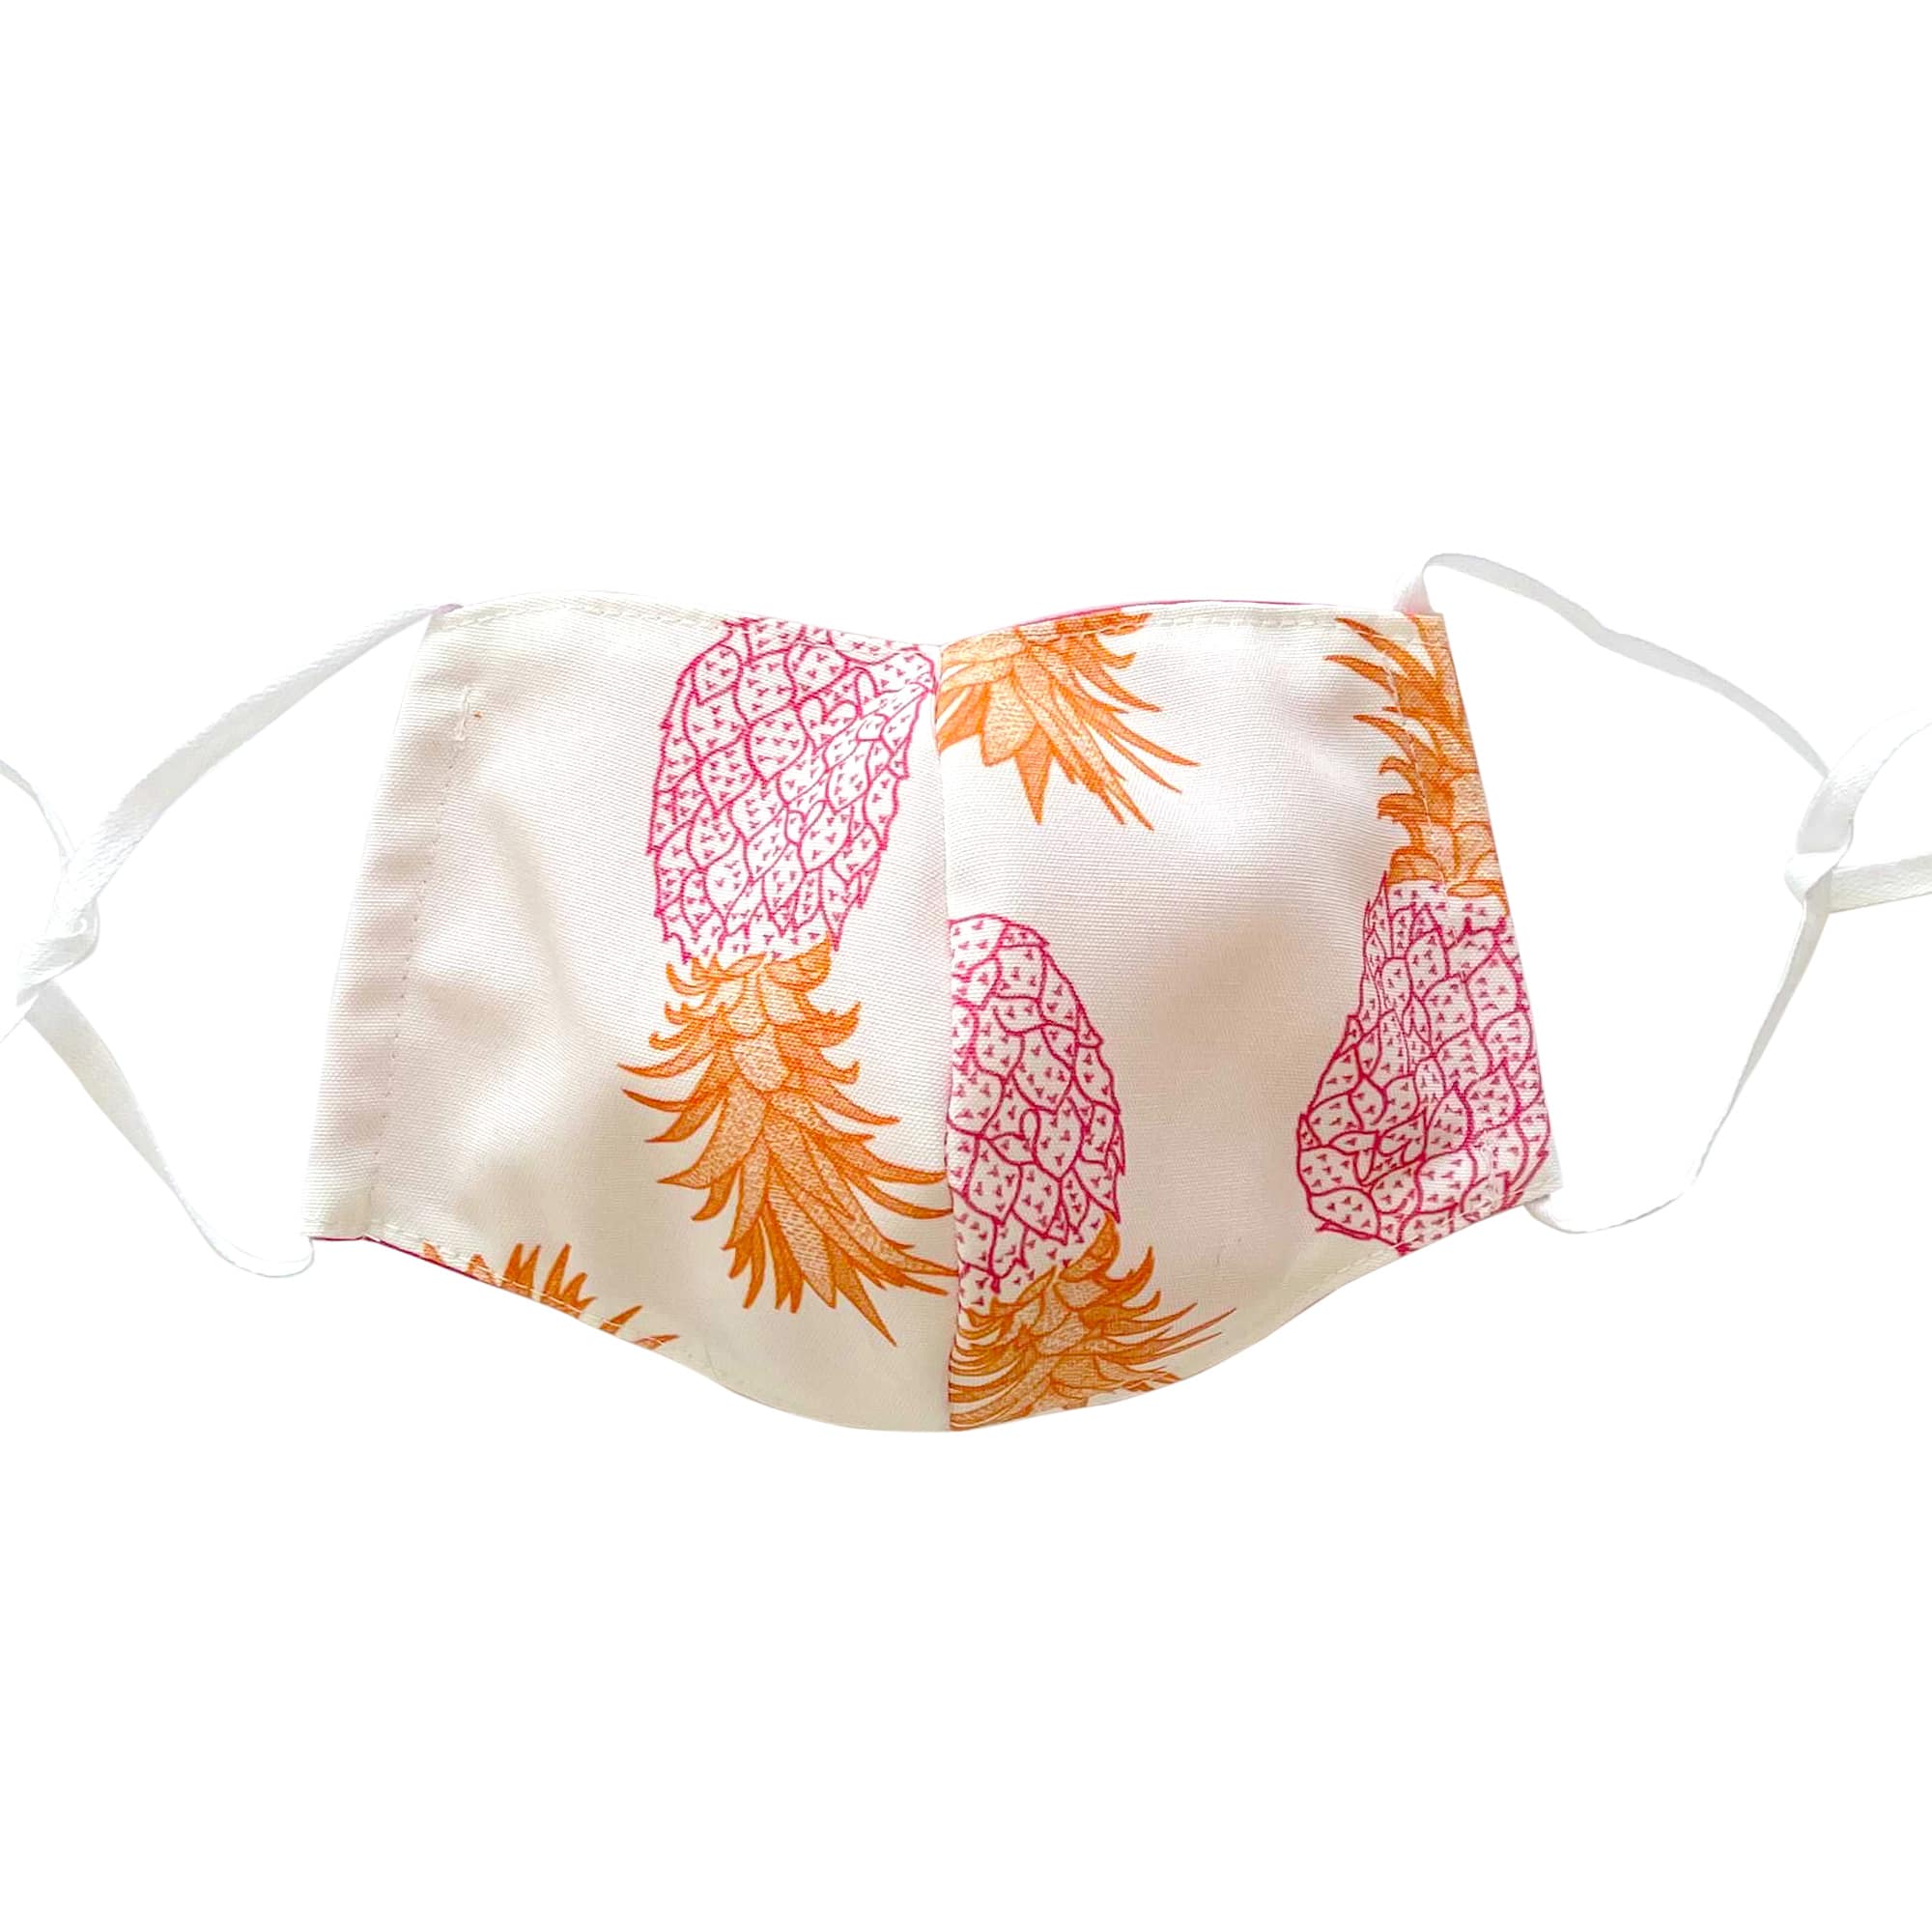 Pineapple-Mask-Covering-Pink-Orange-White-Tropical-New.jpg